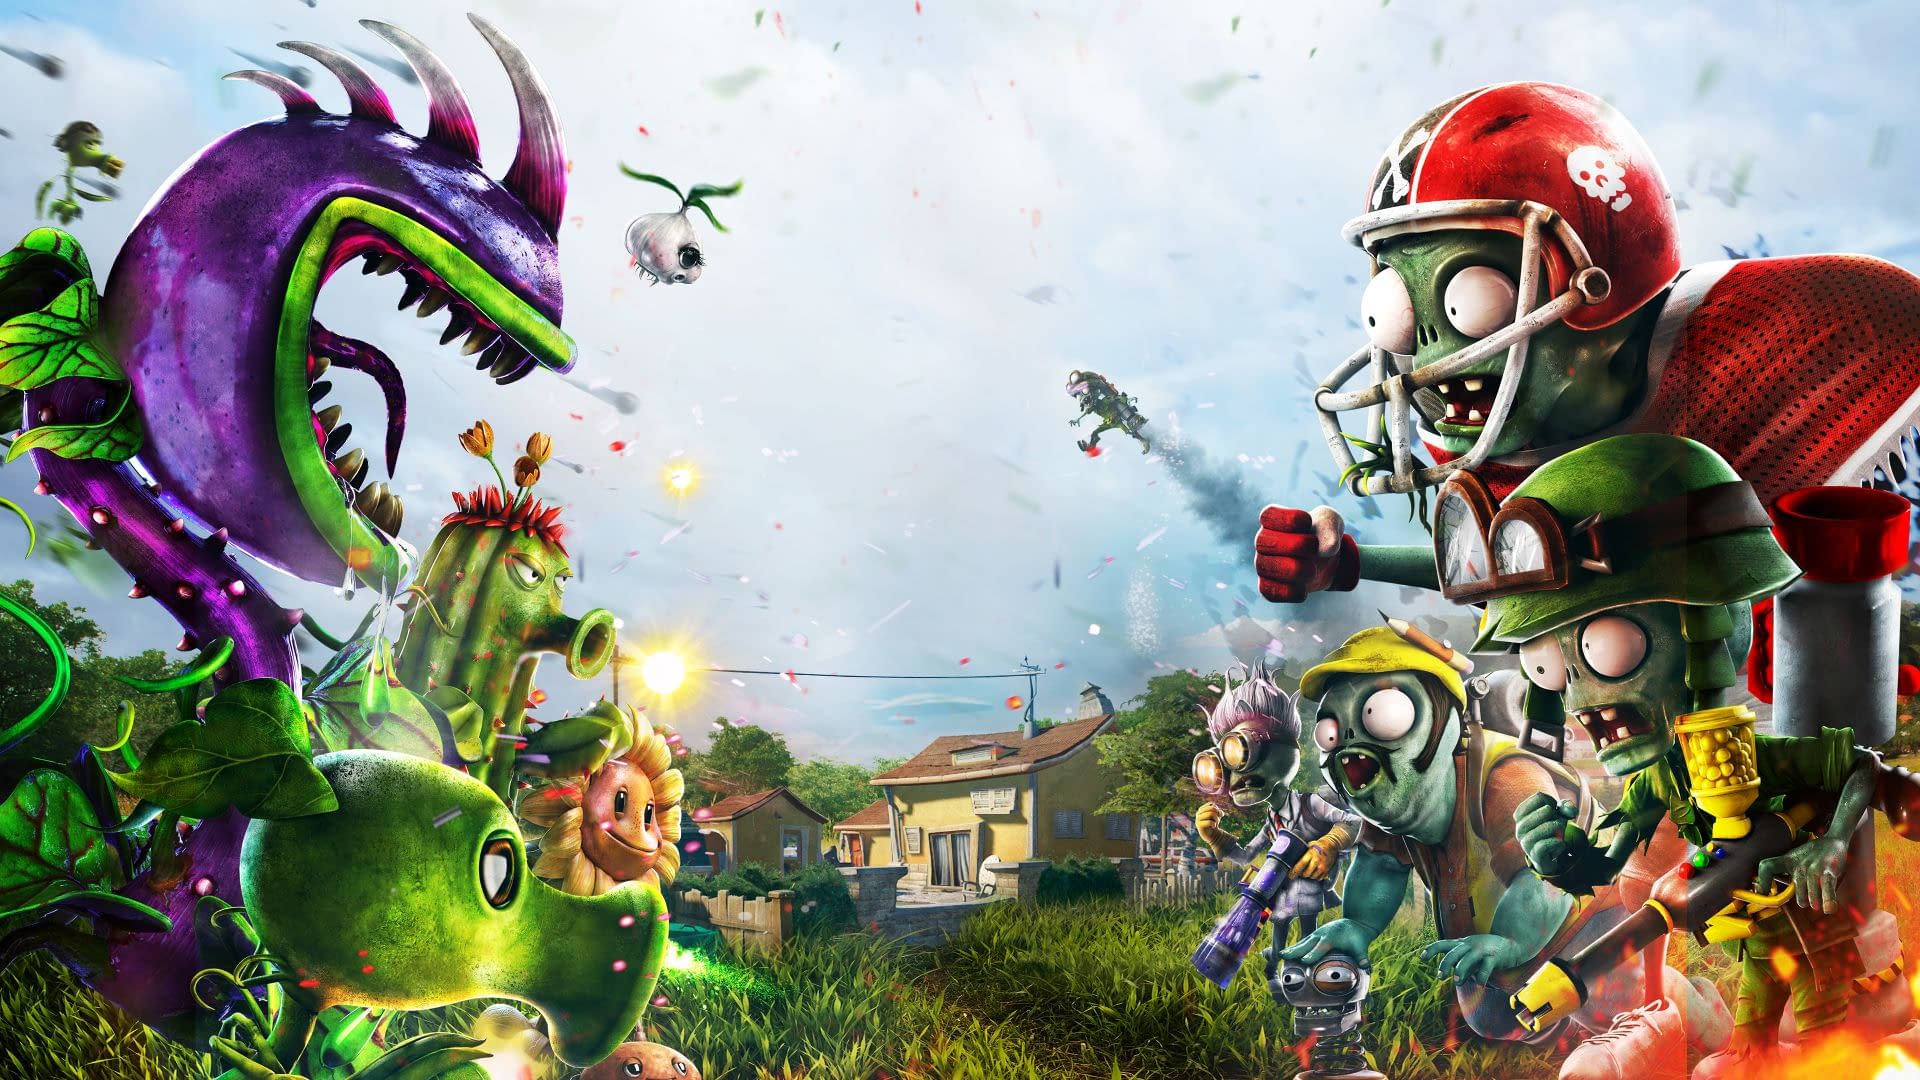 Plants vs. Zombies: Garden Warfare 2 open beta begins next week